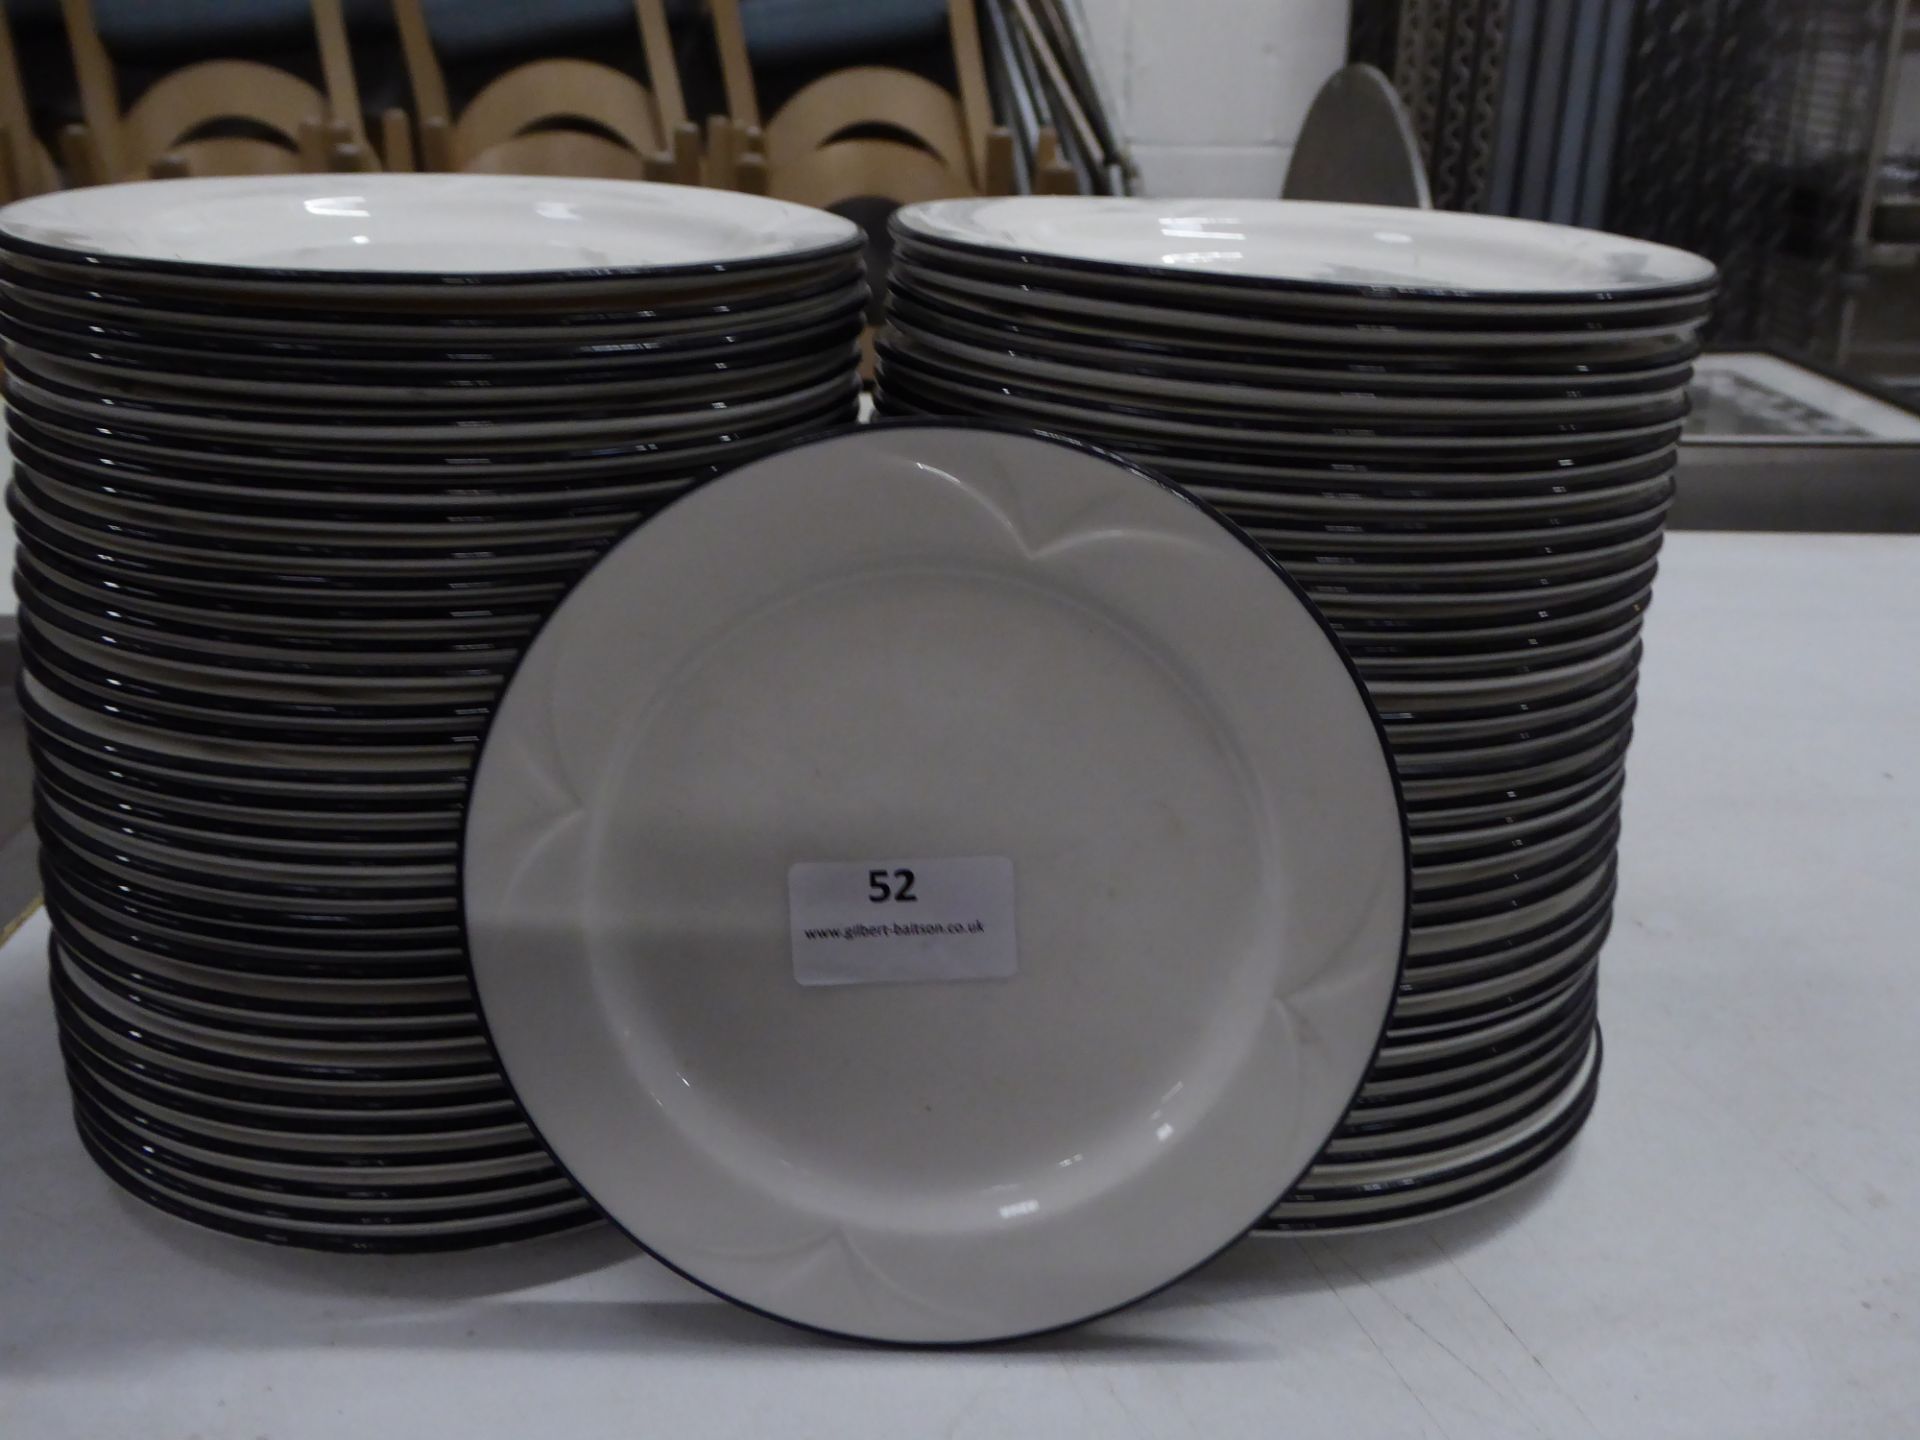 *60+ x white side plates with blue rim. 160 diameter